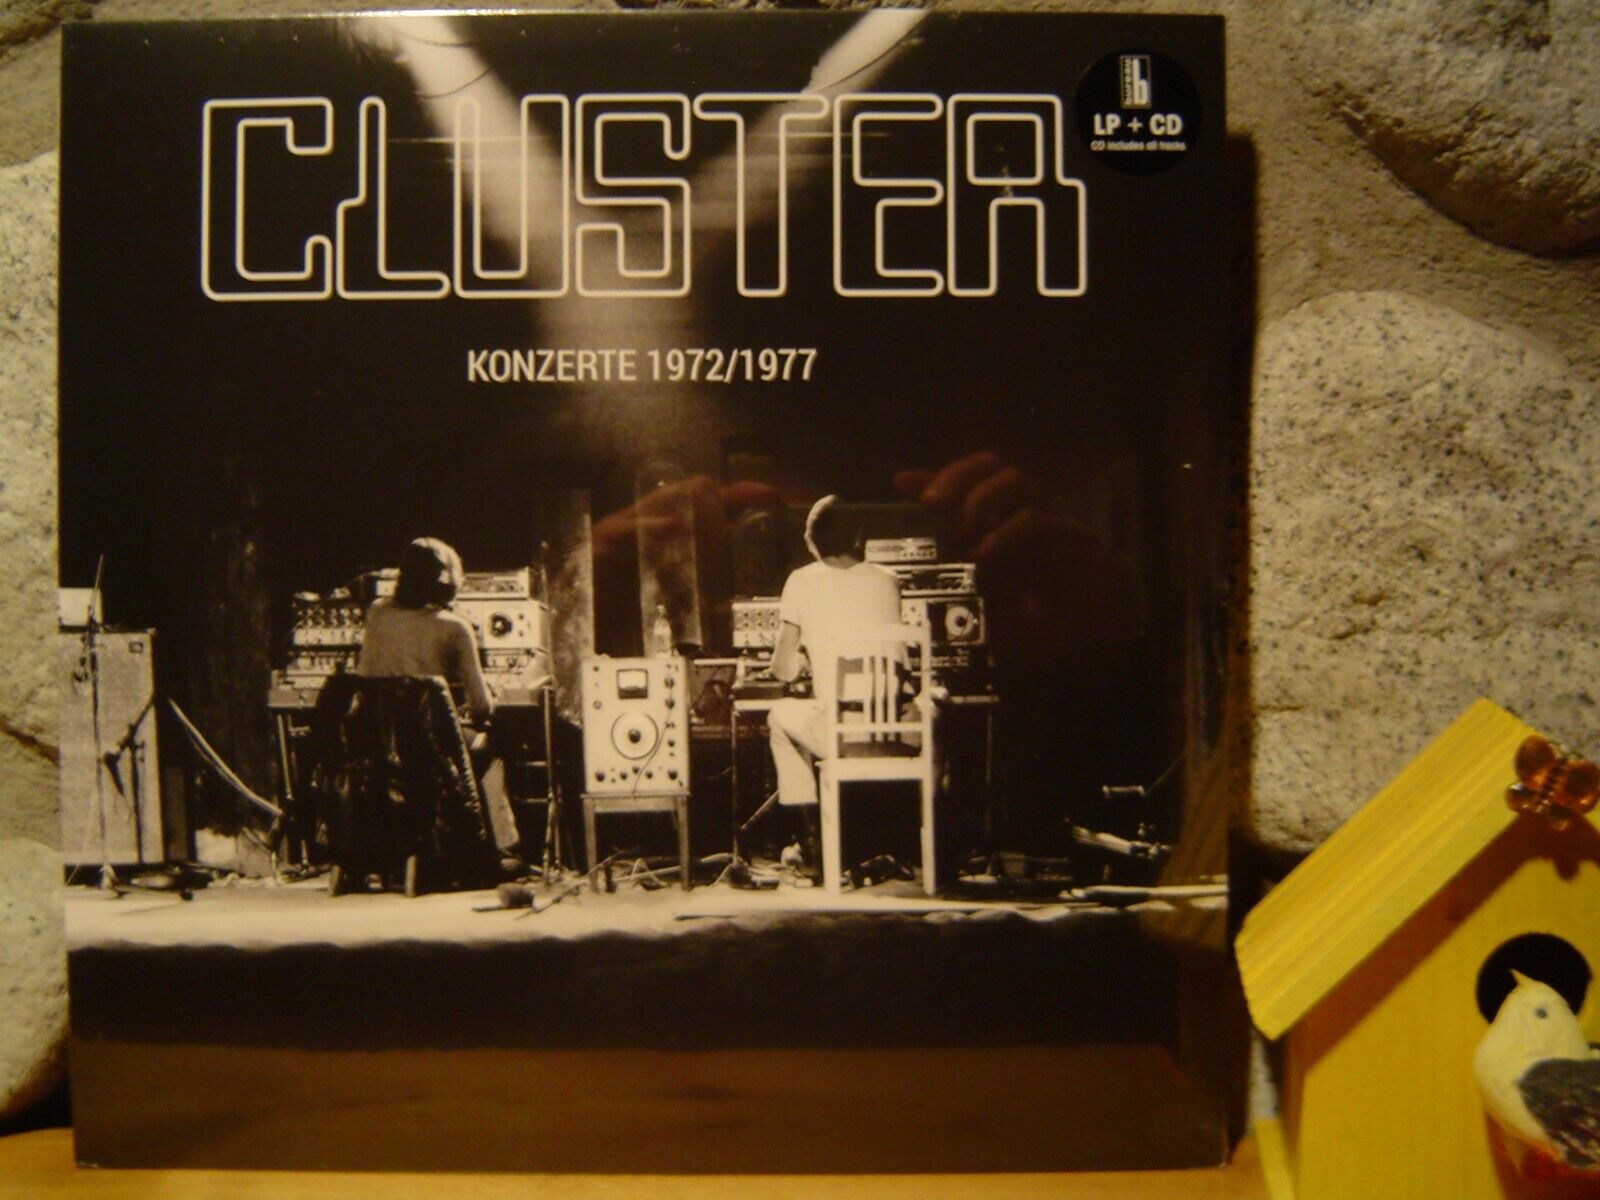 CLUSTER Konzerte 1972/1977 LP+CD/Kluster/Tangerine Dream/Conrad Schnitzler